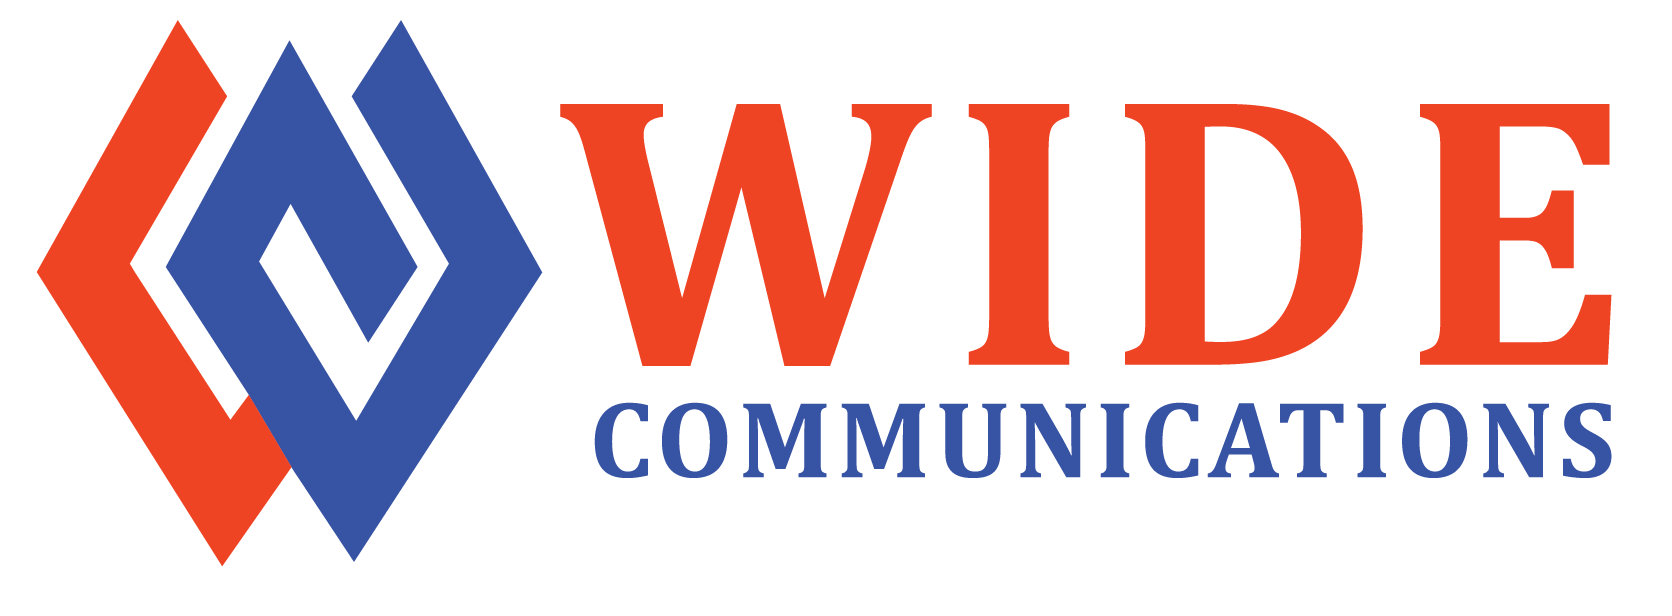 WIDE COMMUNICATIONS-logo